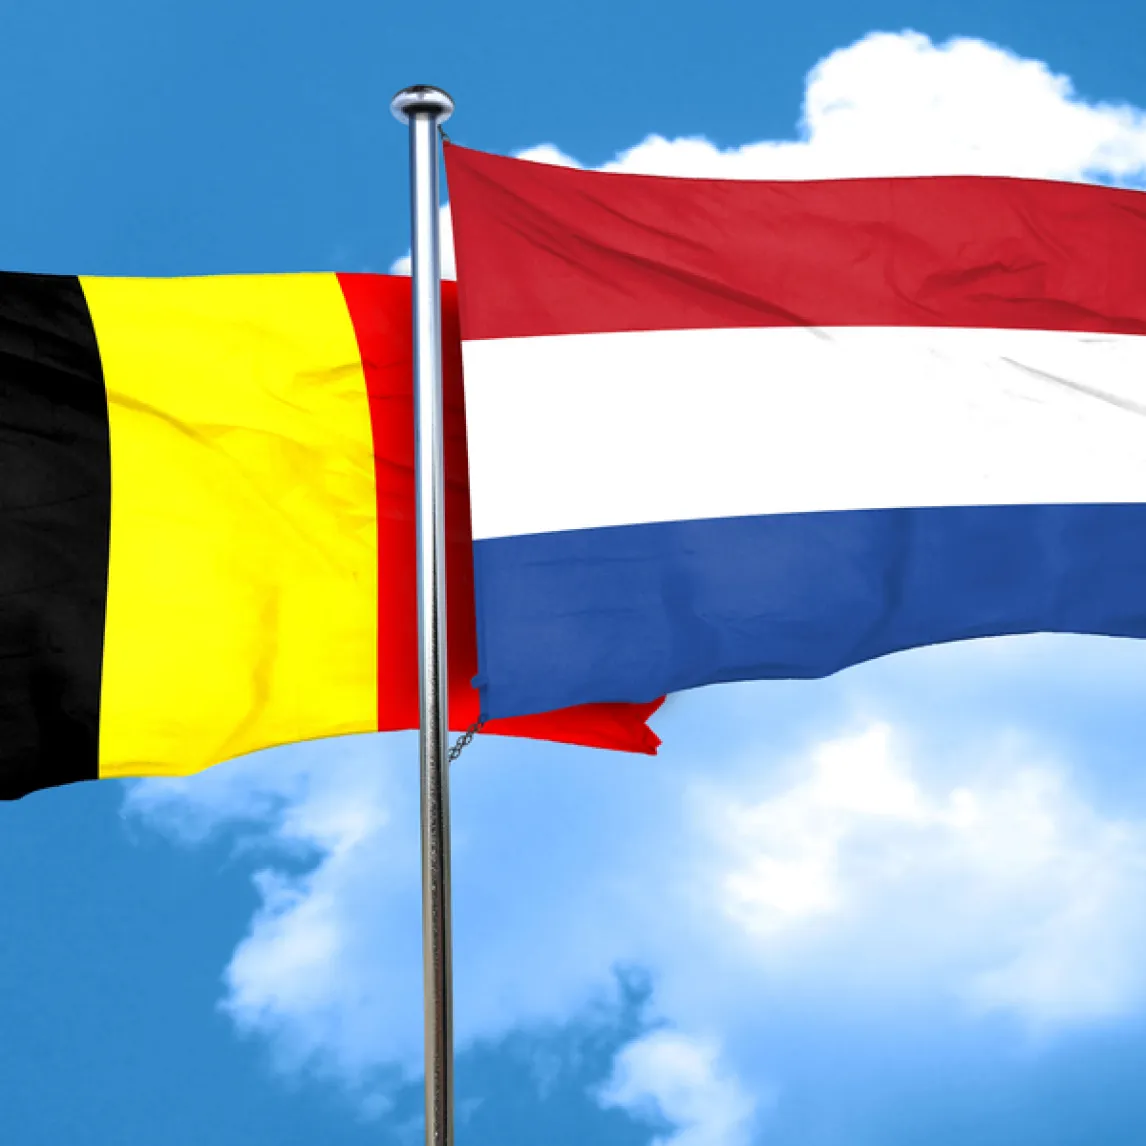 drapeau belge et neerlandais